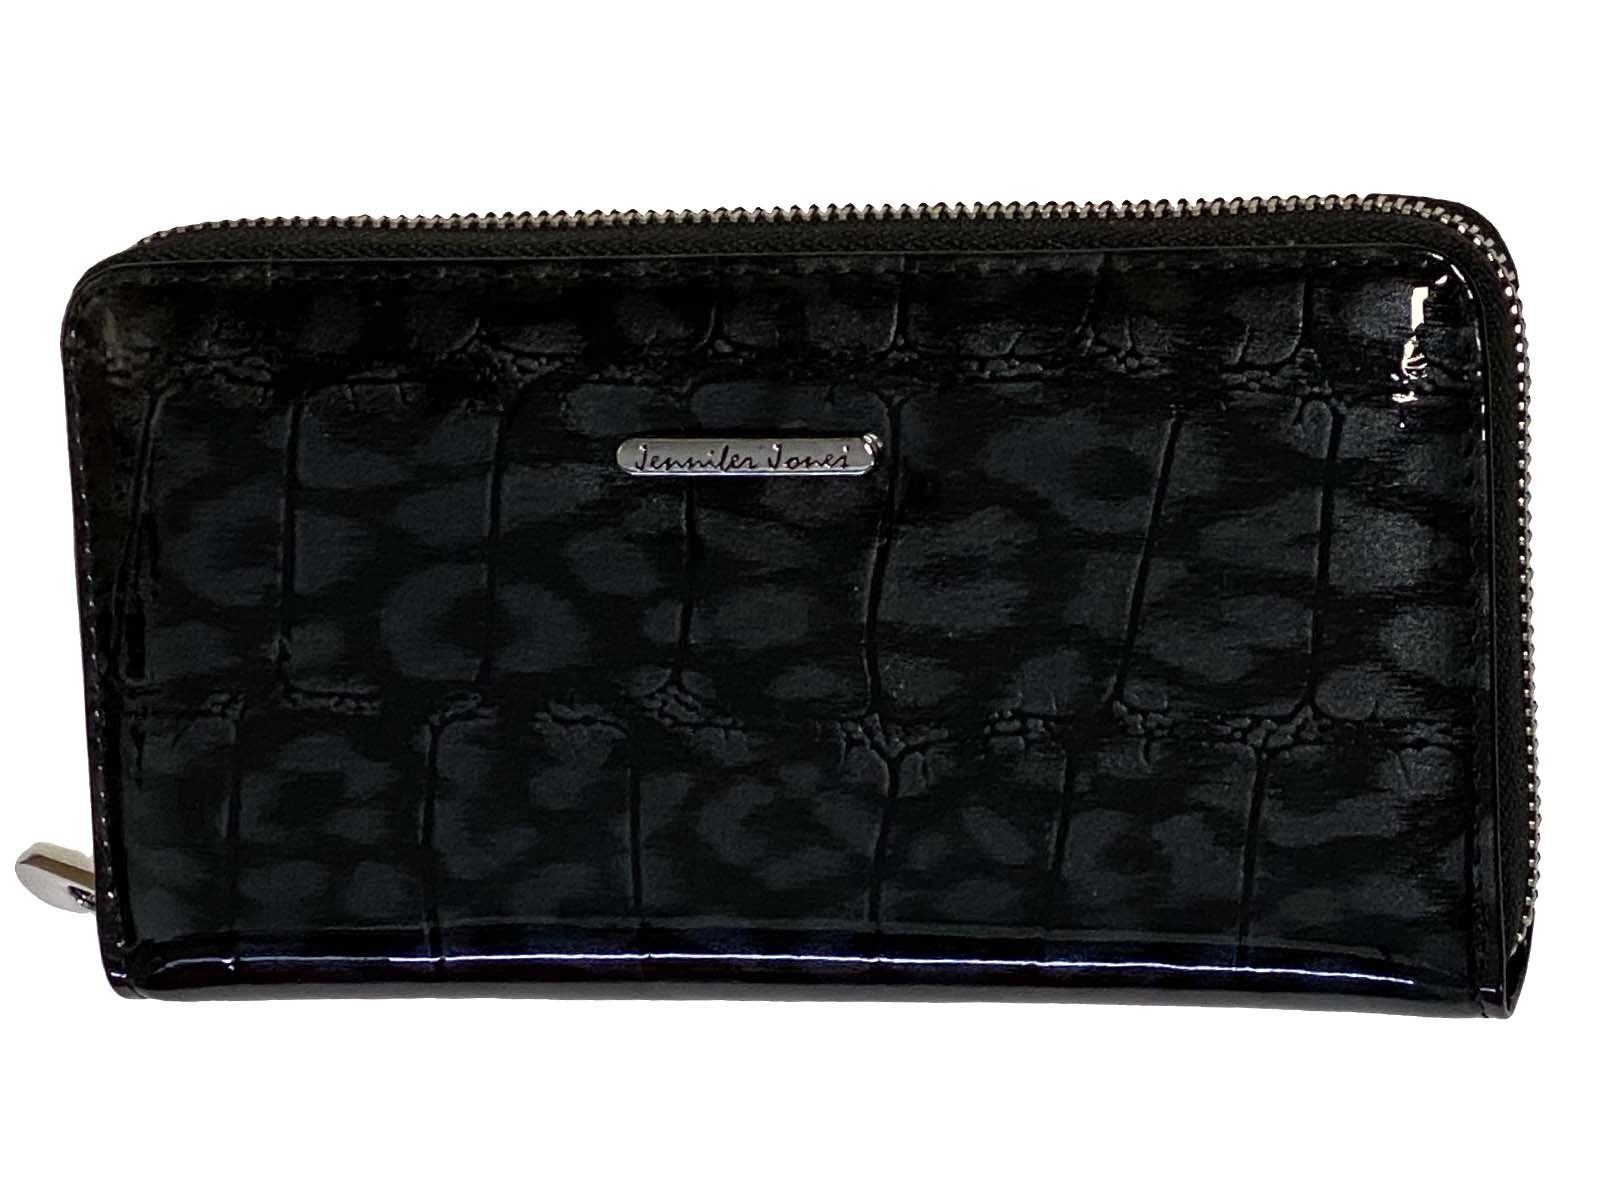 Jennifer Jones Geldbörse Damen-Geldbörse-Reißverschluss RFID-Large-Kroko-Design 12 CC-Slots schwarz